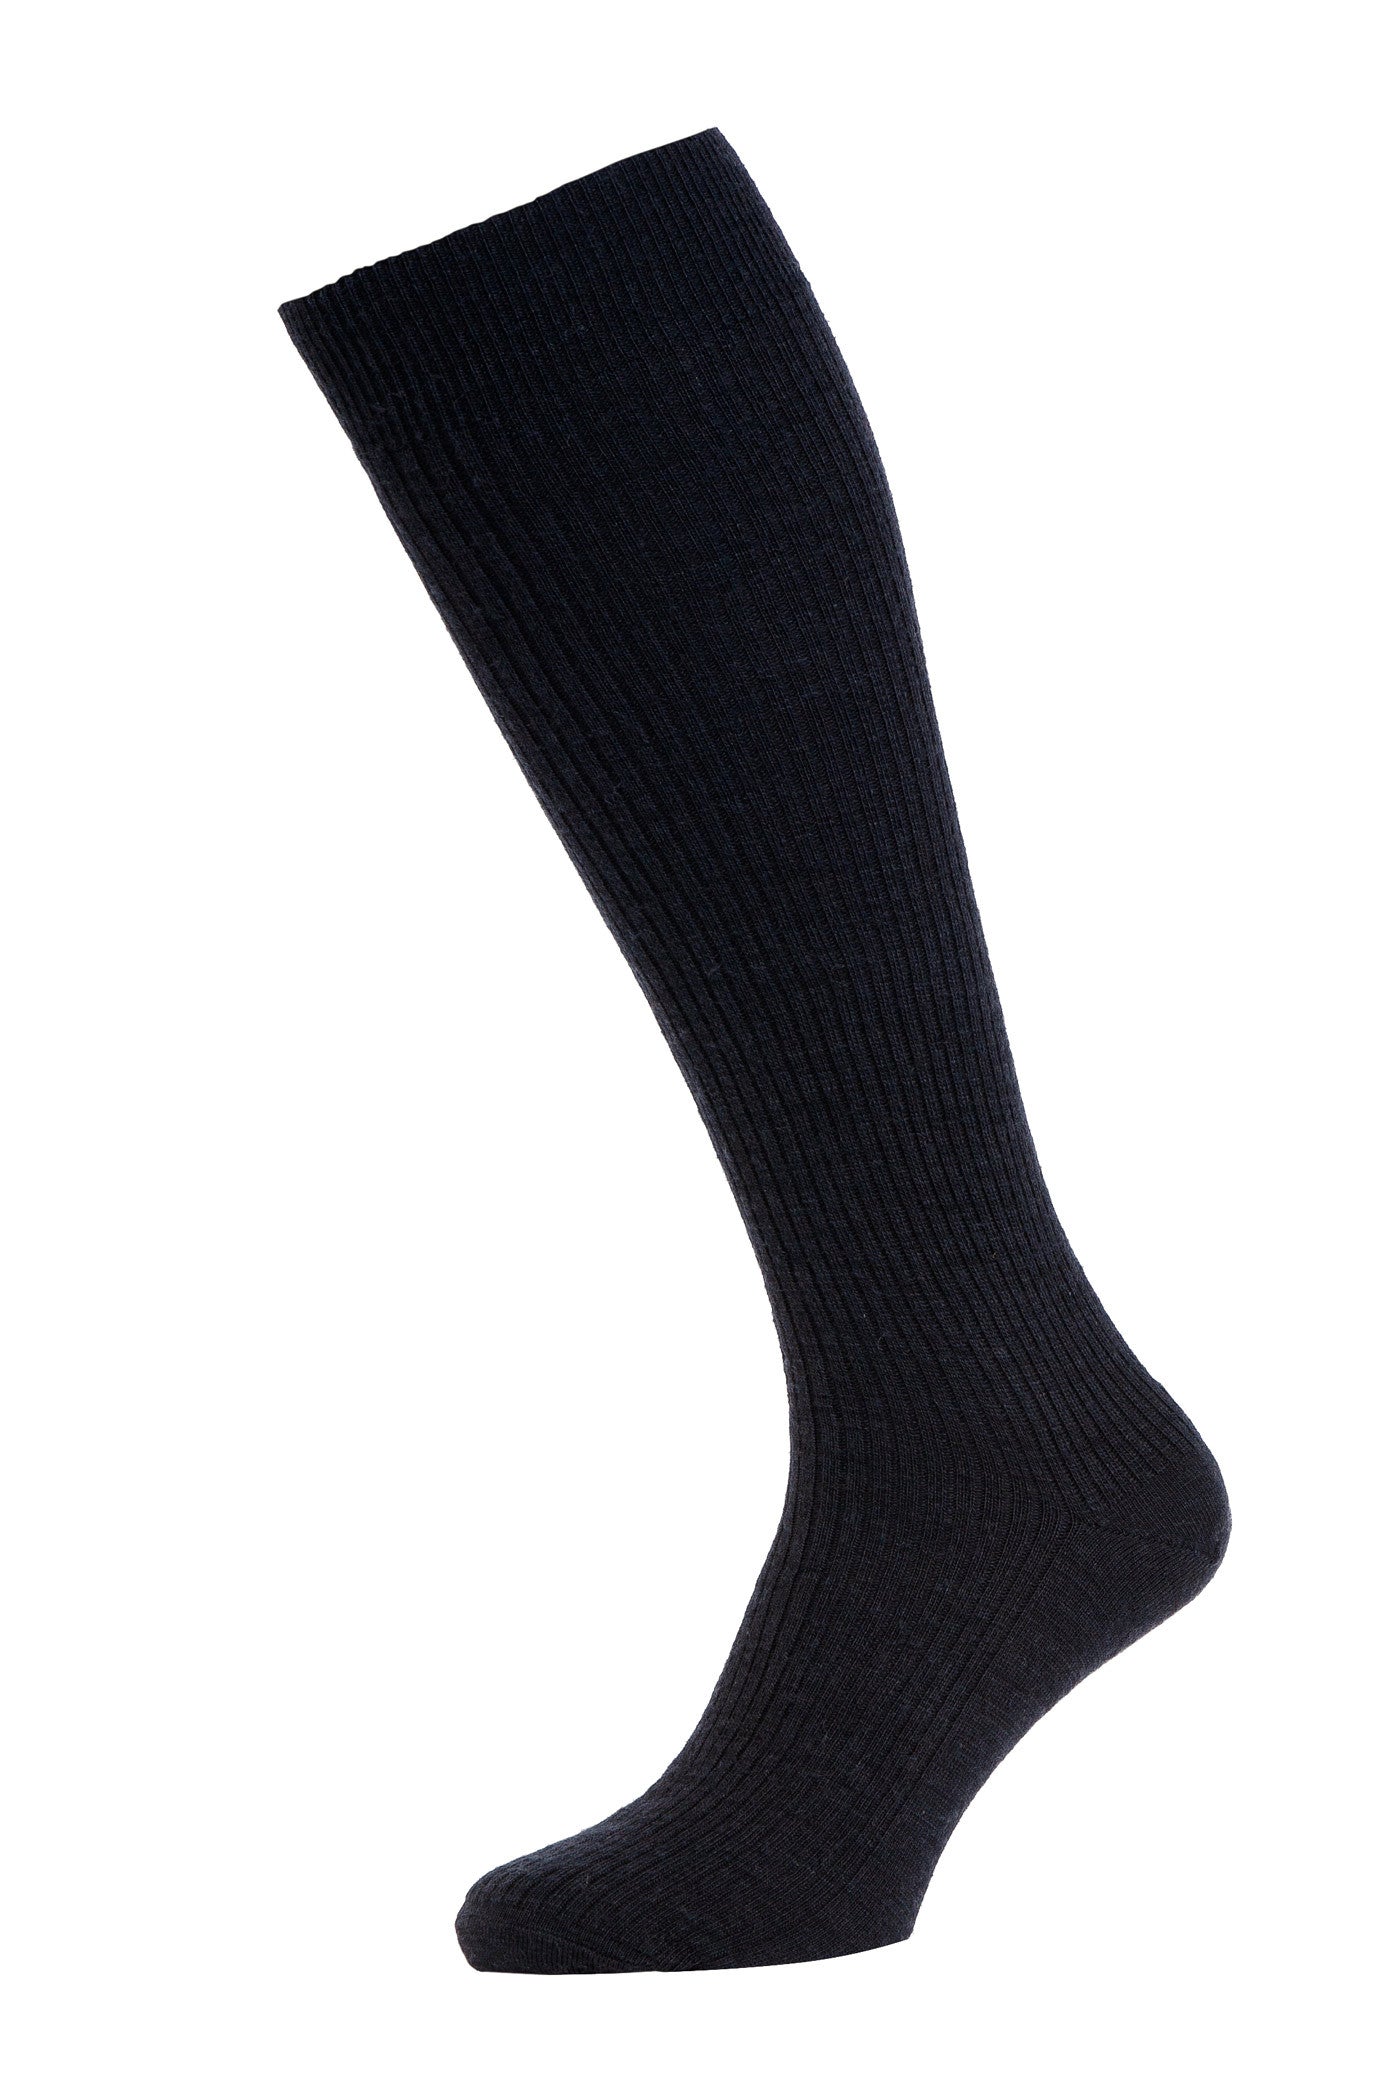 HJ Hall HJ77 Immaculate Long Black Wool Rich Sock